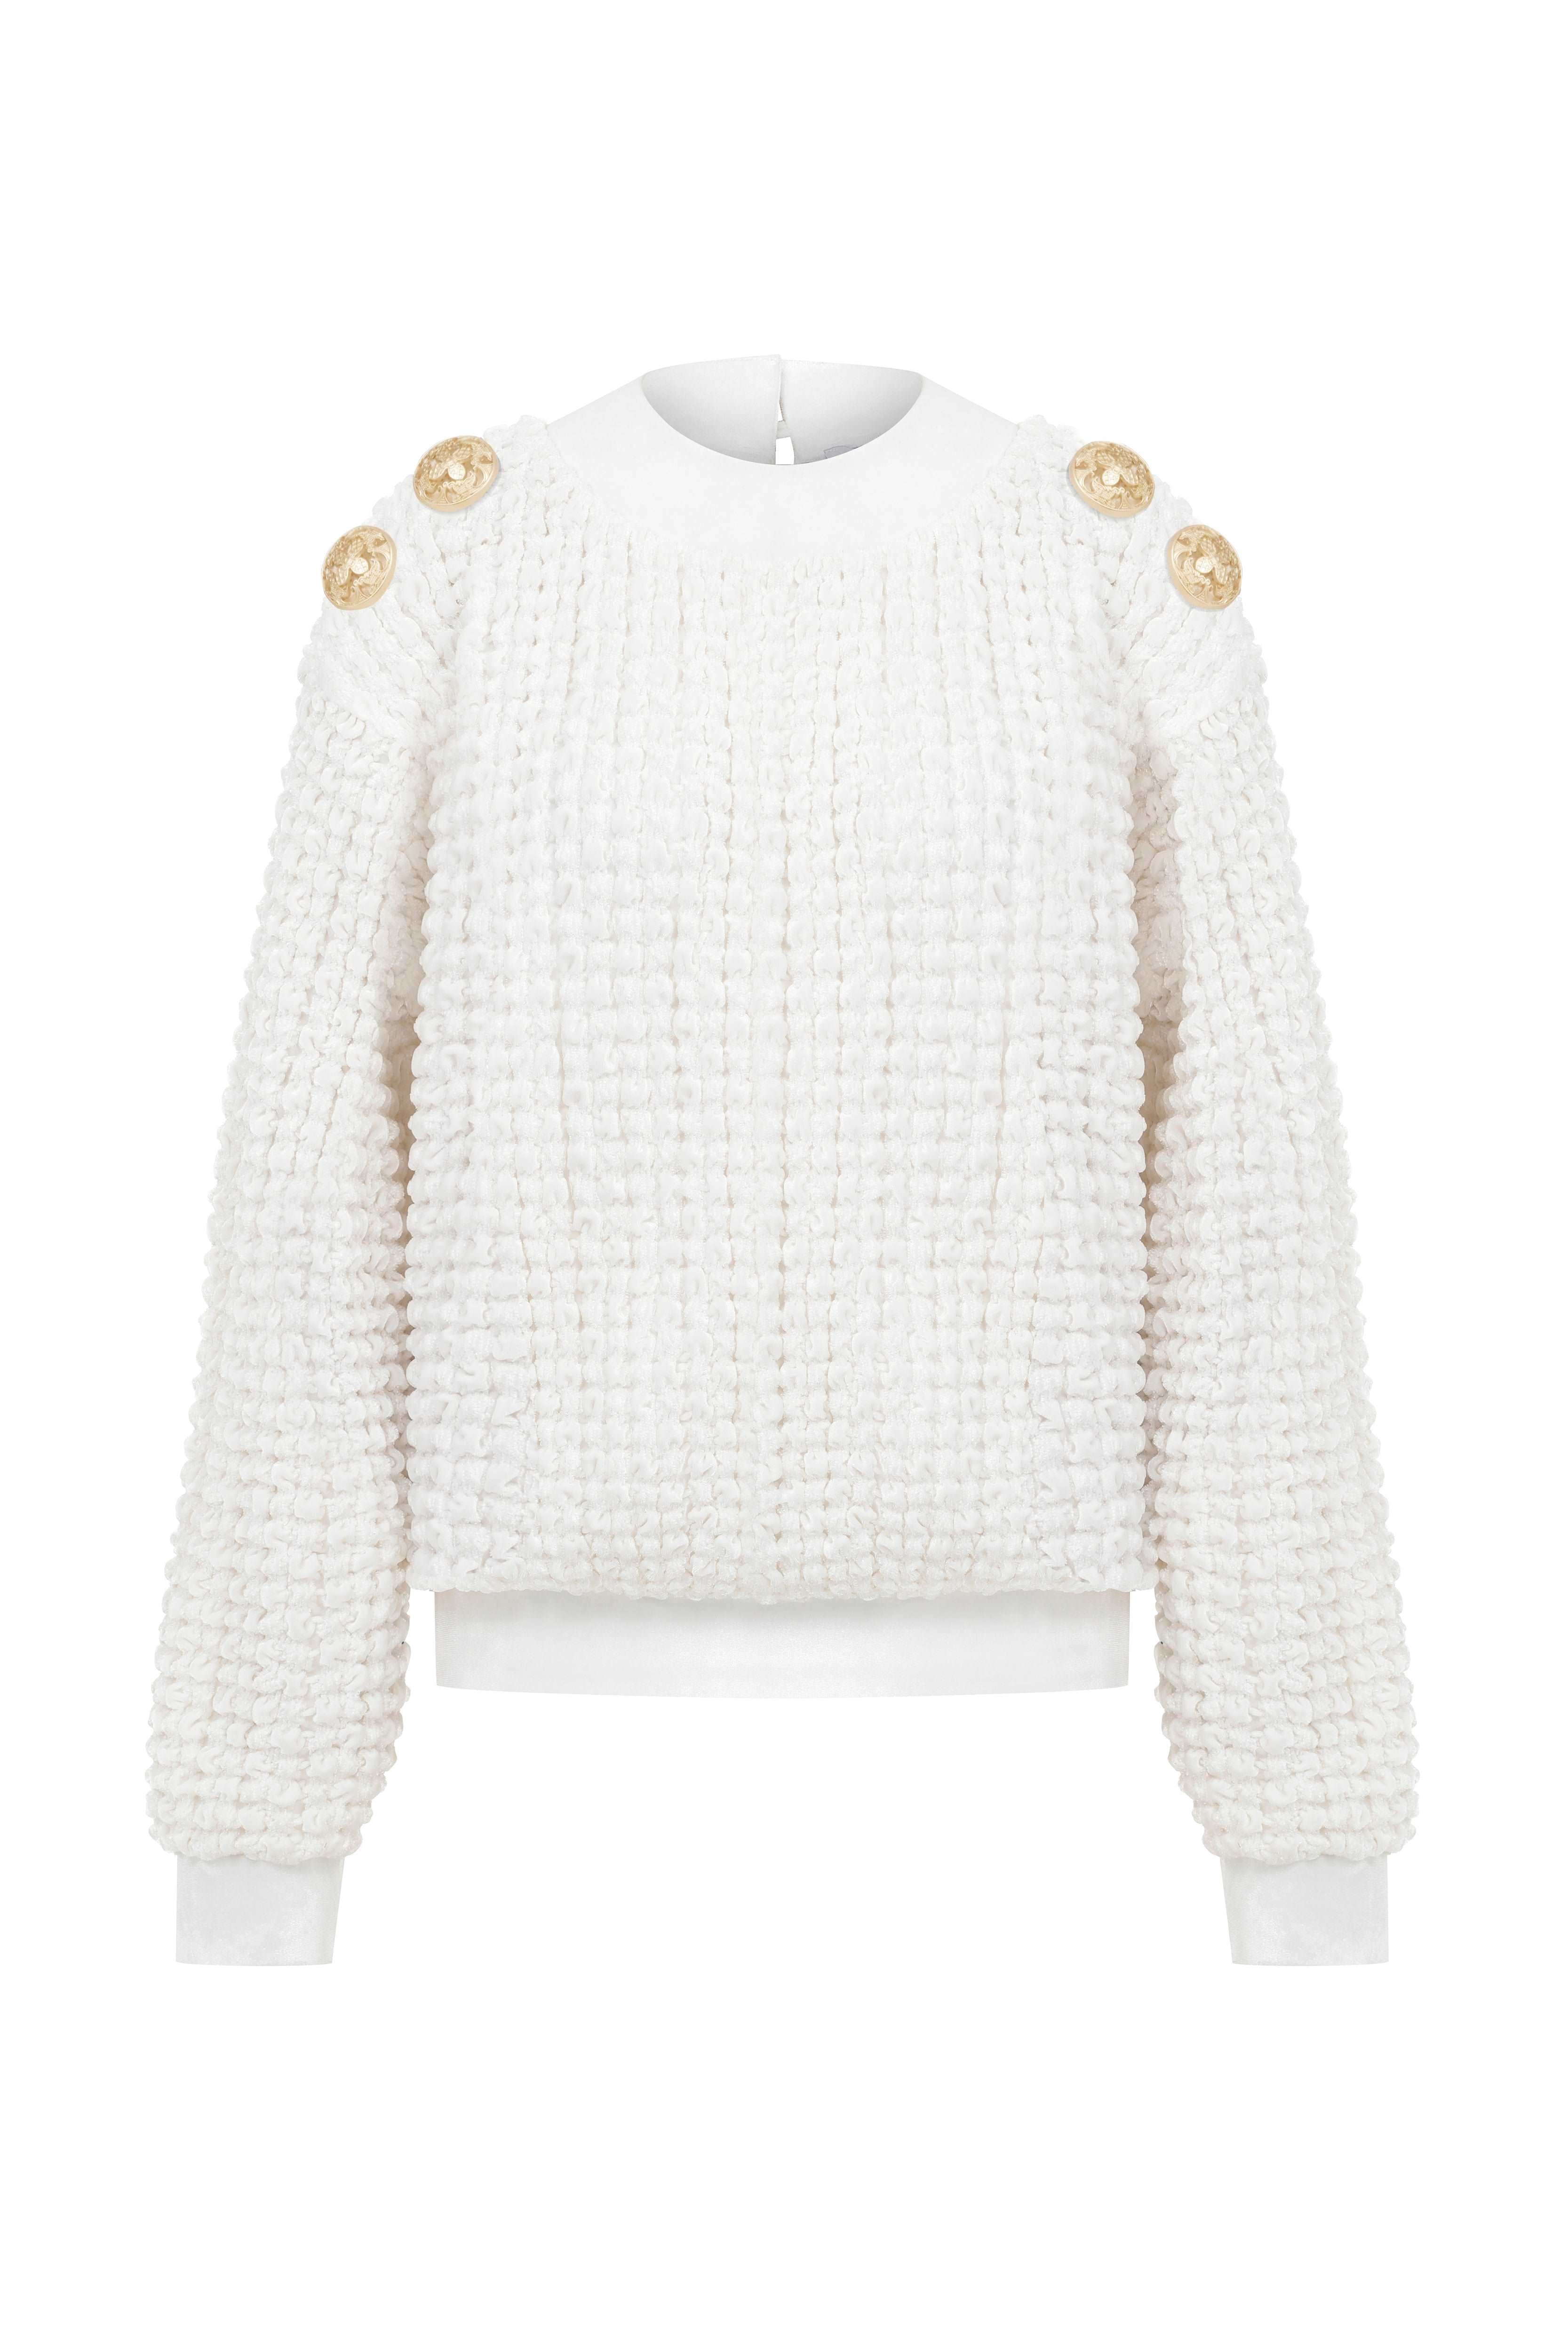 Cream Velvet Crochet Sweater with Gold Buttons